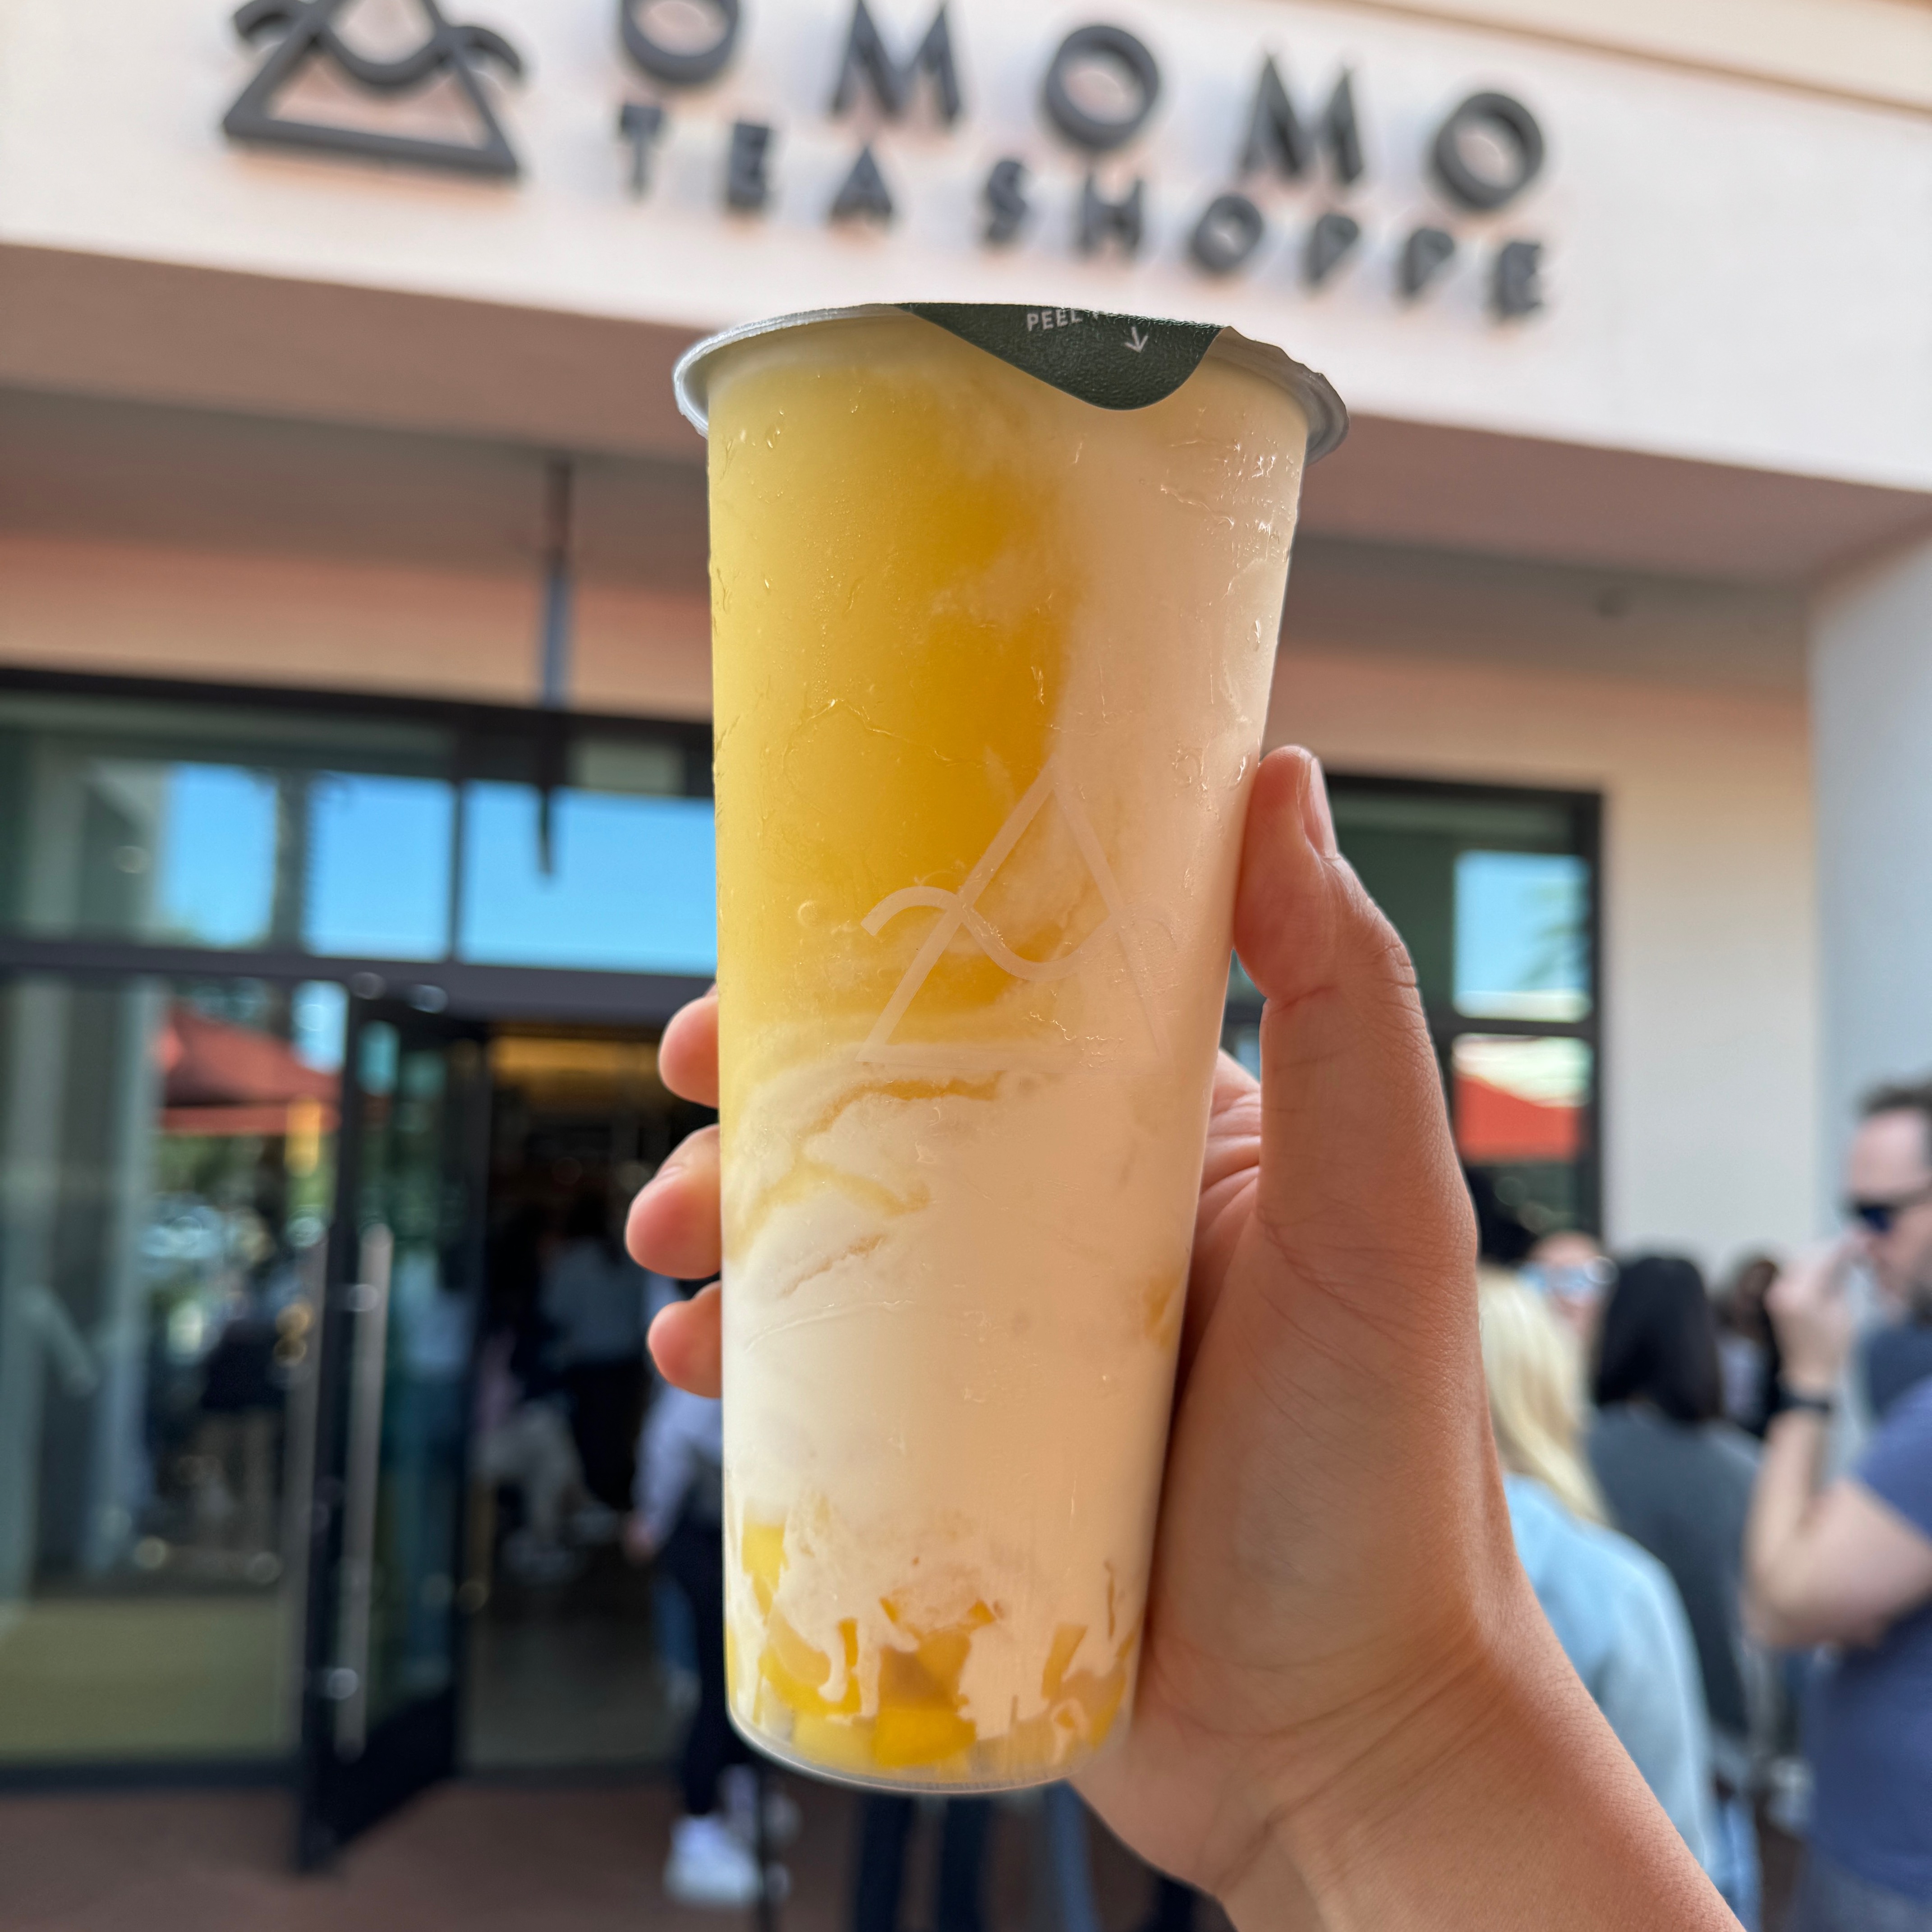 Mango Tornado $6.75 from Omomo Tea Shop on #foodmento http://foodmento.com/dish/57576